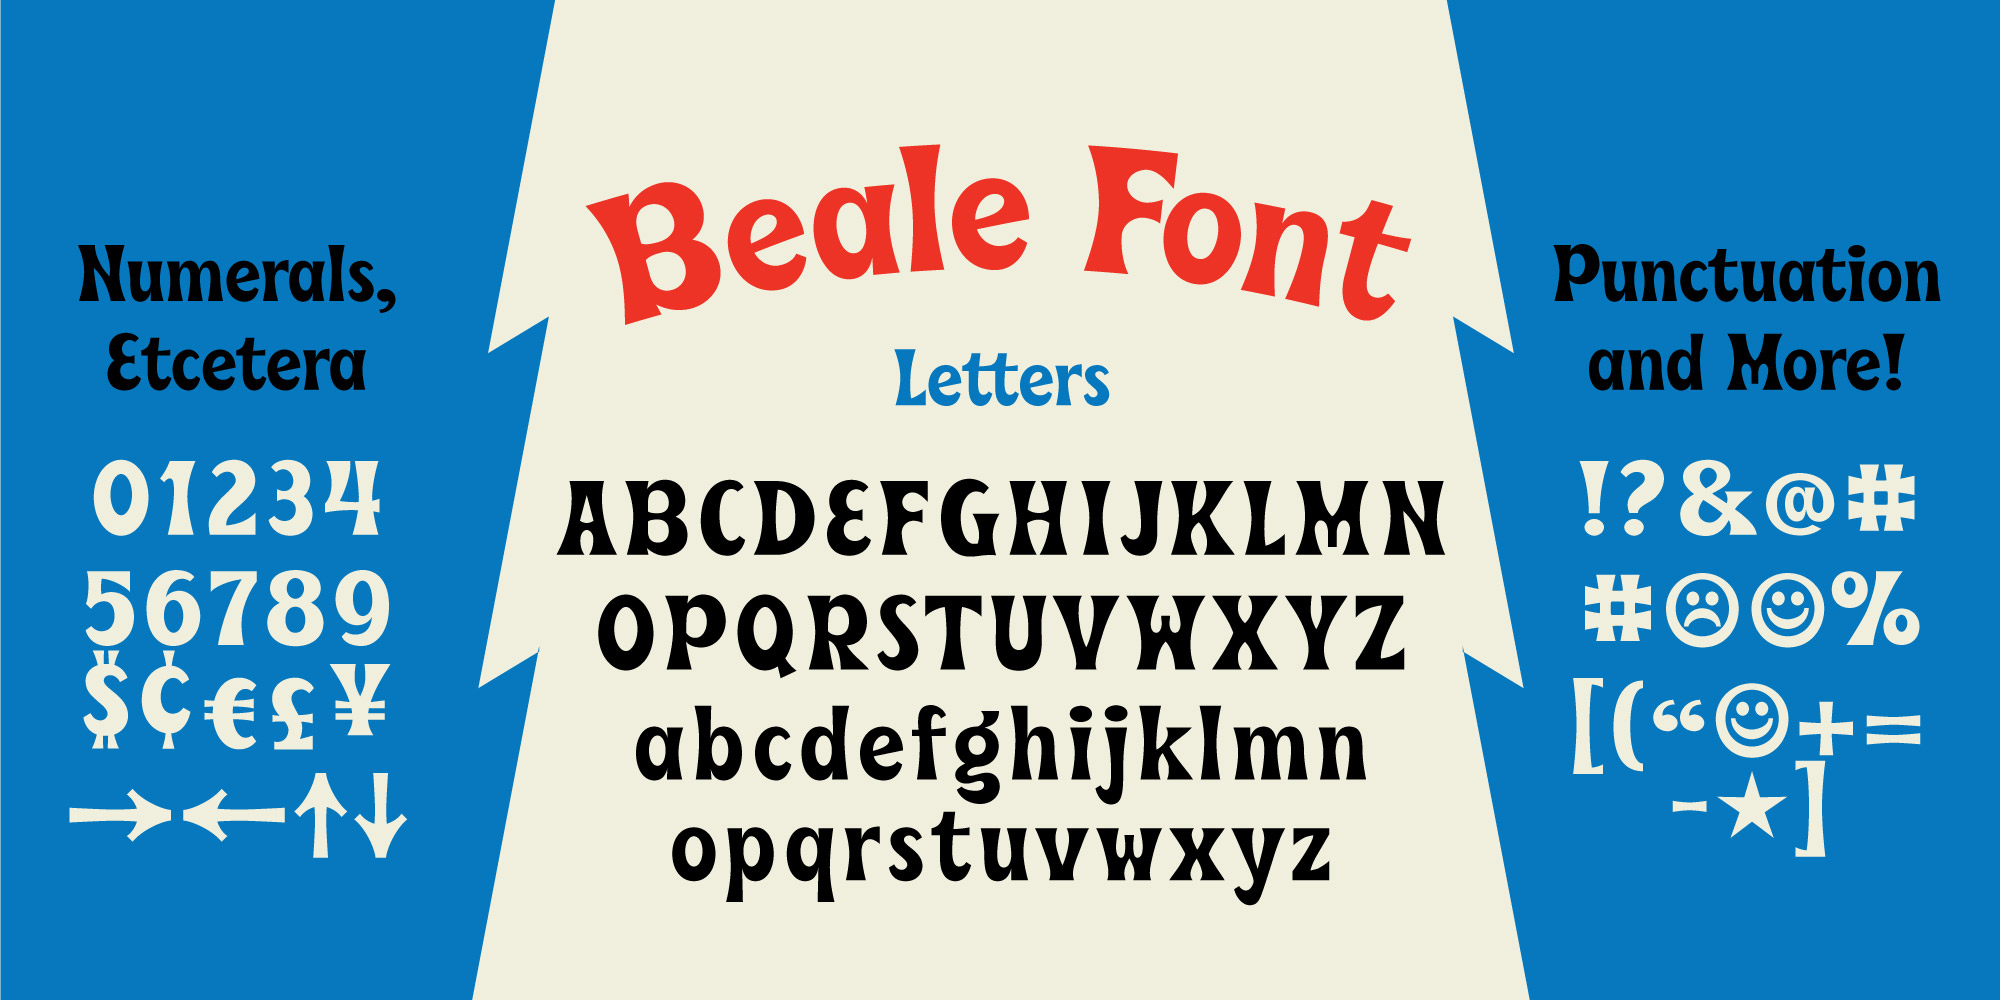 Beale font characters by Hoodzpah